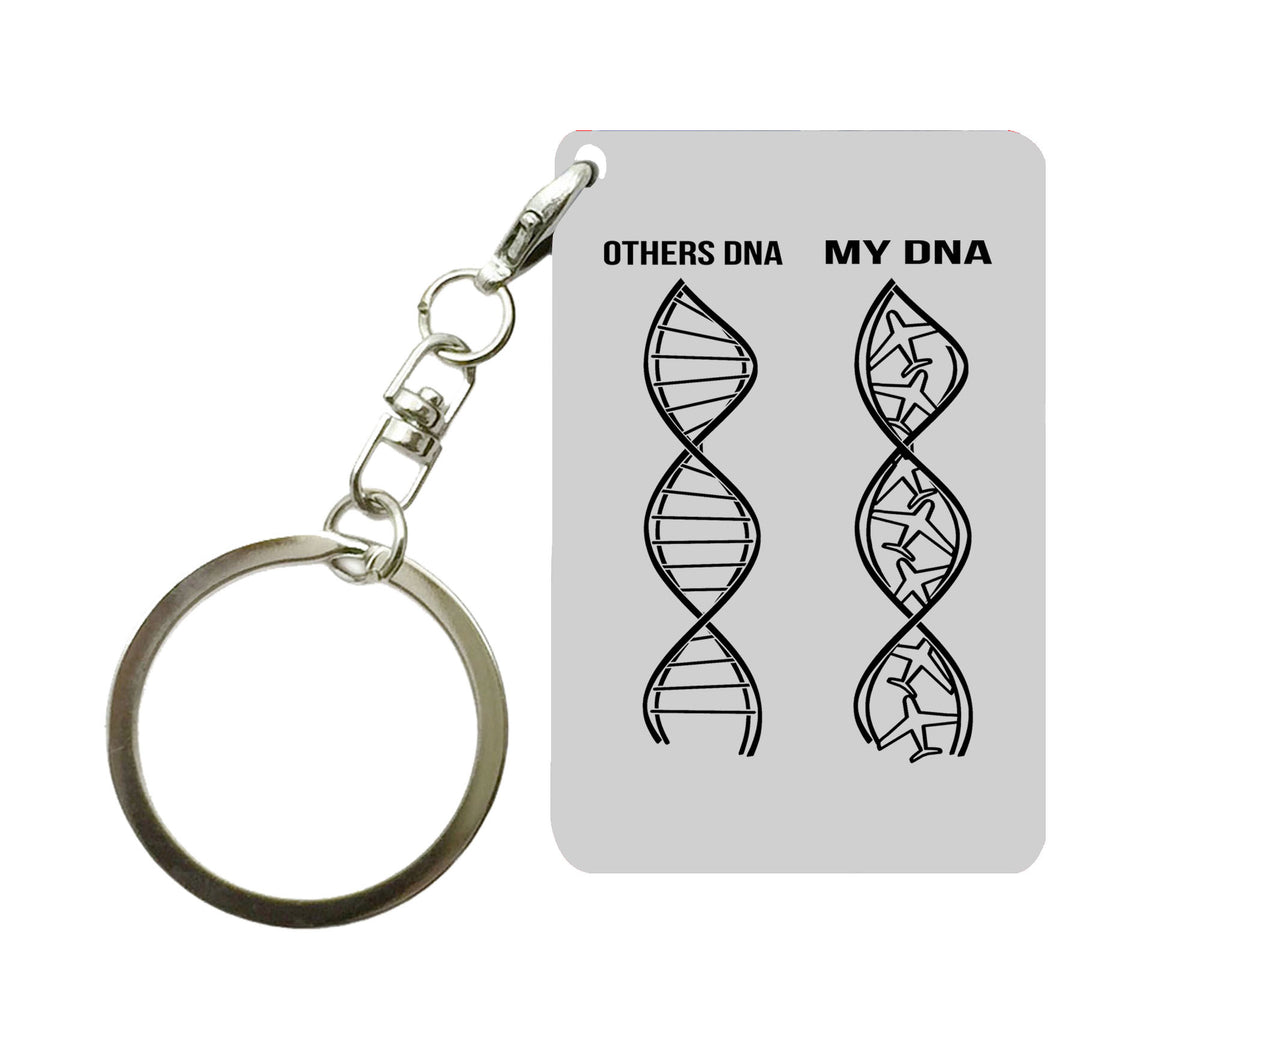 Aviation DNA Designed Key Chains